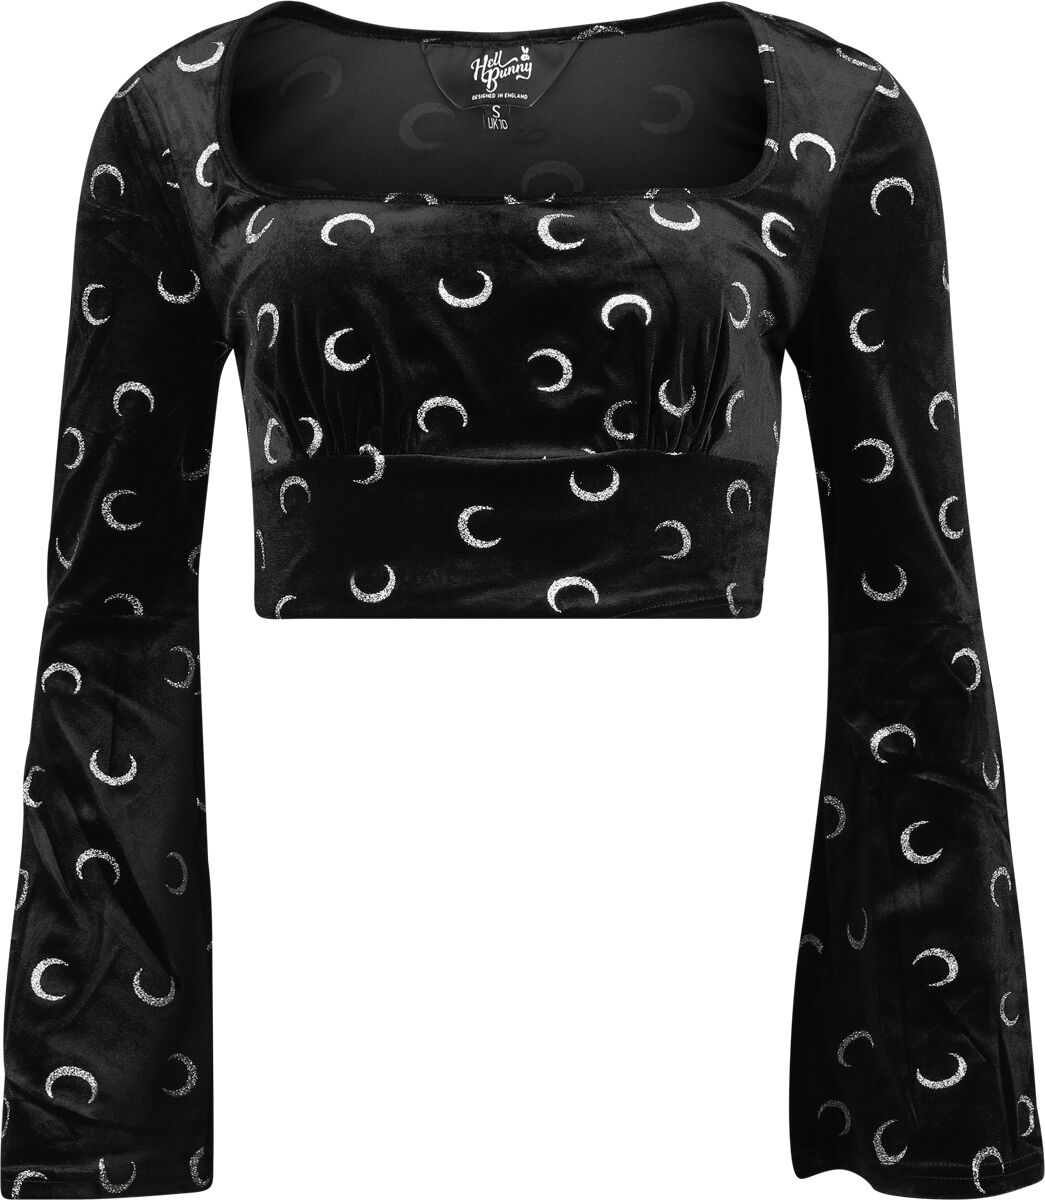 Hell Bunny Misty Moon Top Langarmshirt schwarz weiß in XL